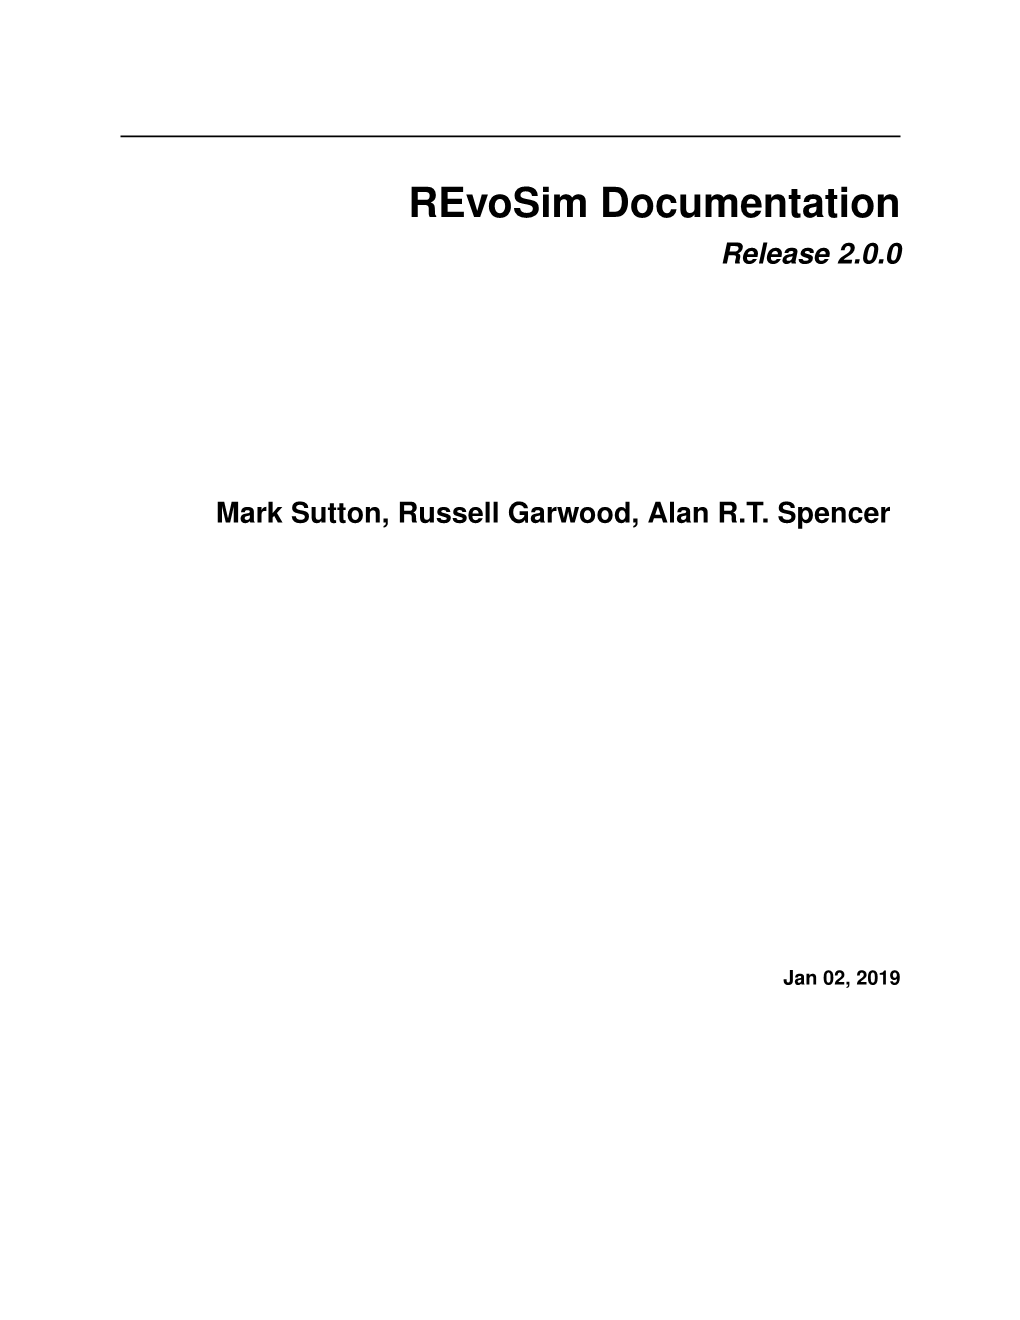 Revosim Documentation Release 2.0.0